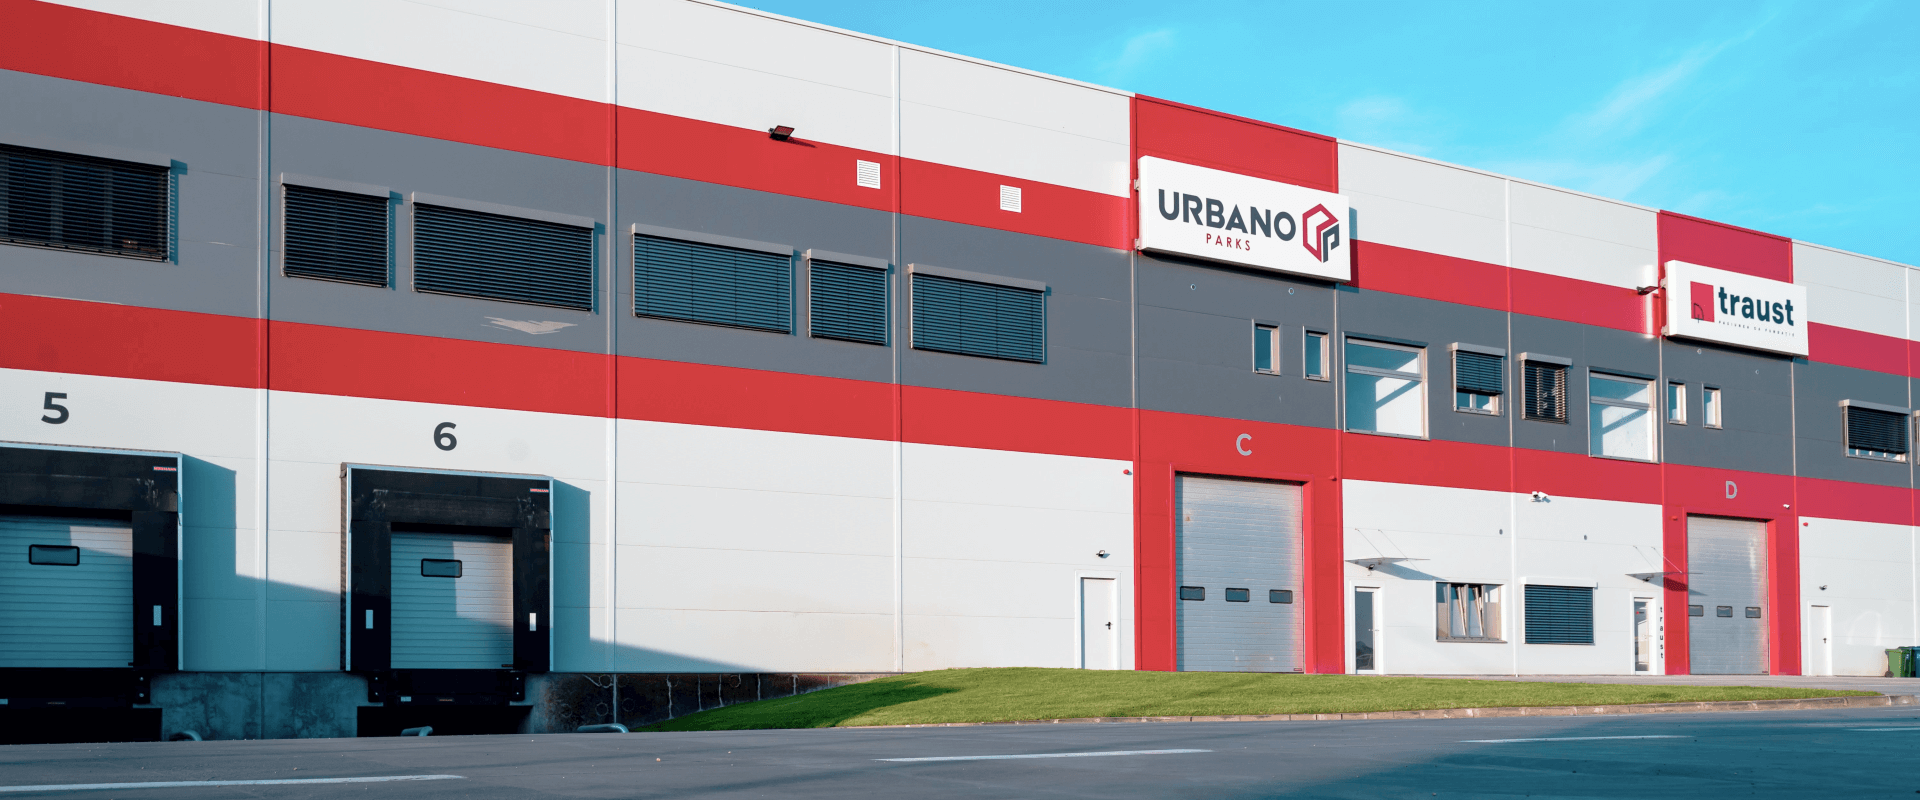 Parc industrial si logistic - Urbano Cluj Vest